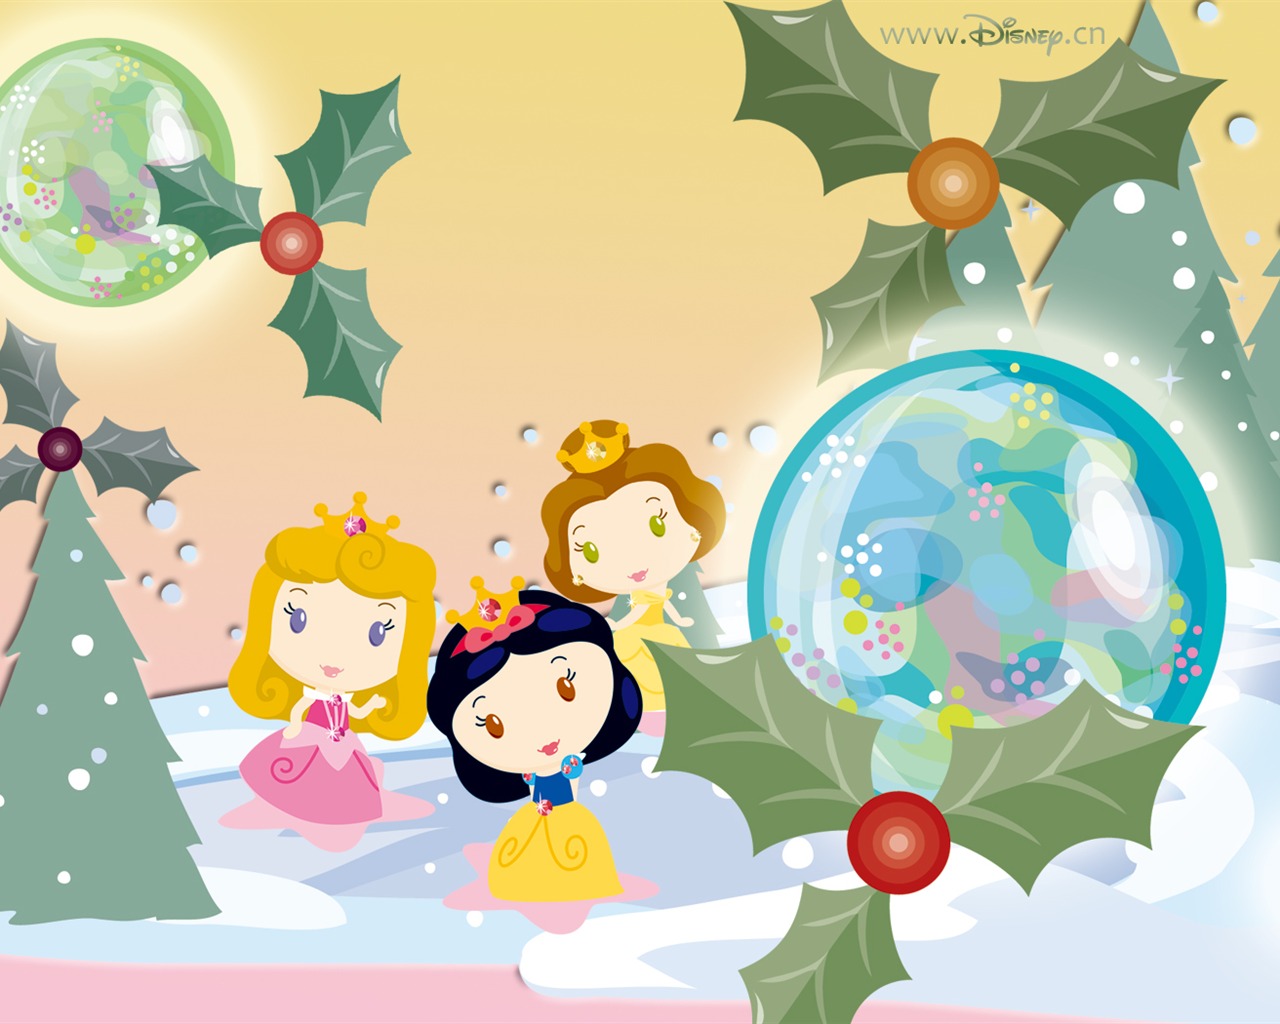 Princess Disney cartoon wallpaper (1) #11 - 1280x1024